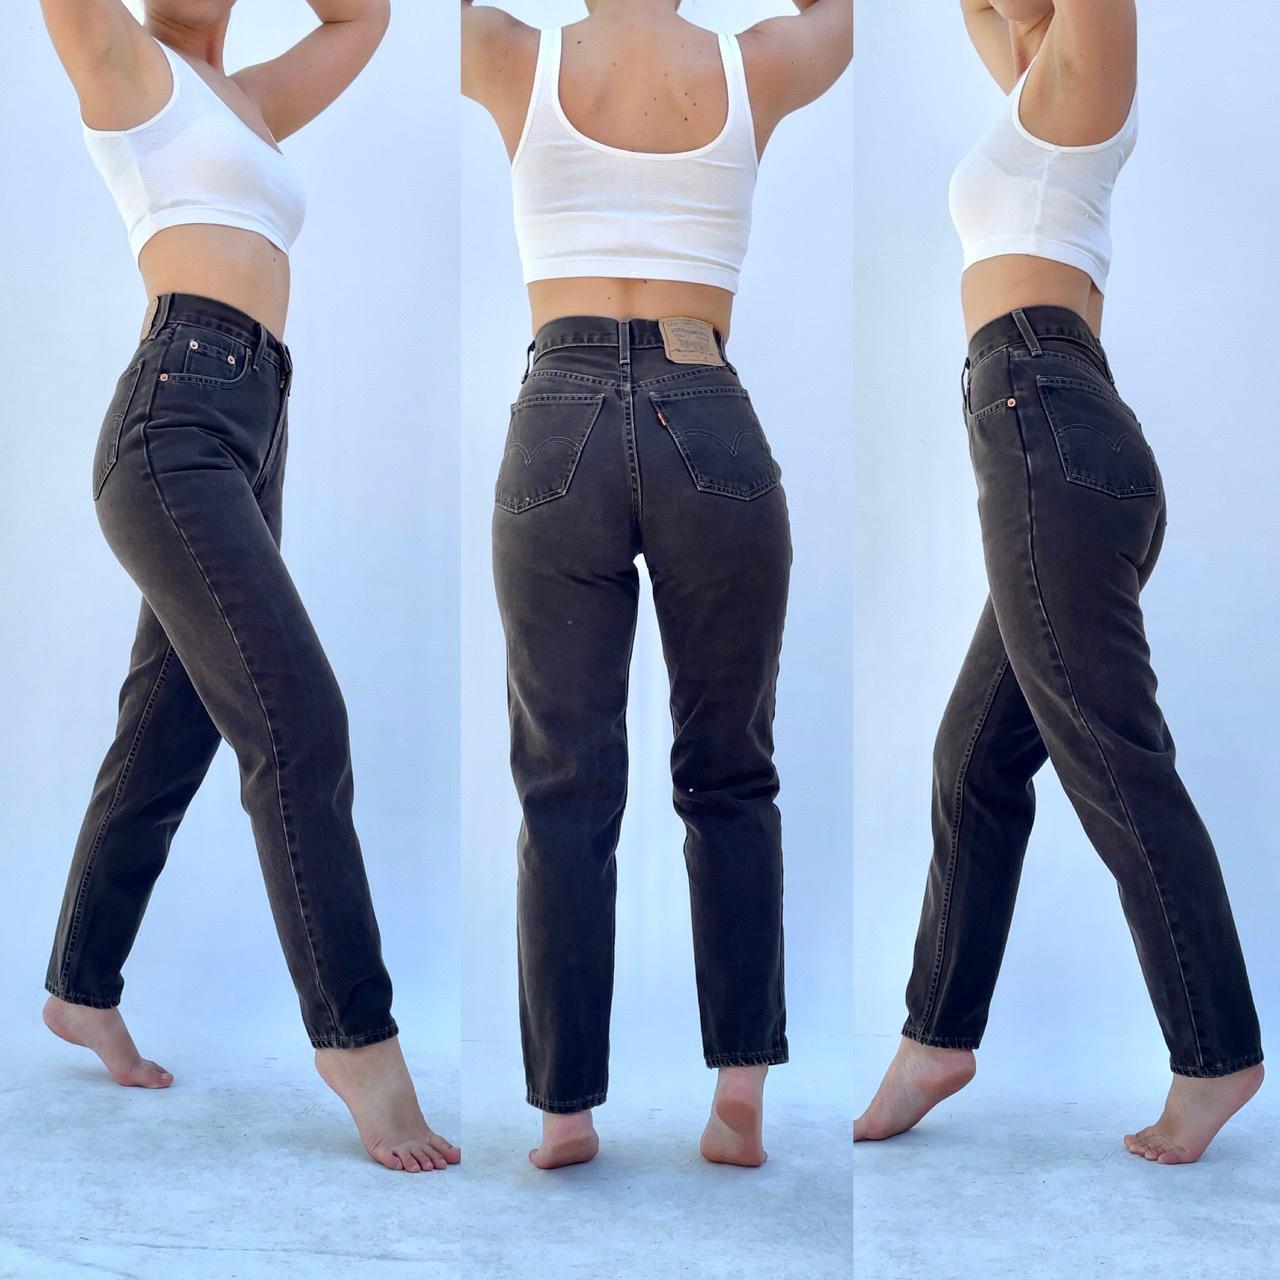 Vintage Levis Mom Jeans Size 29-30 / Levis 881 High Waisted Jeans